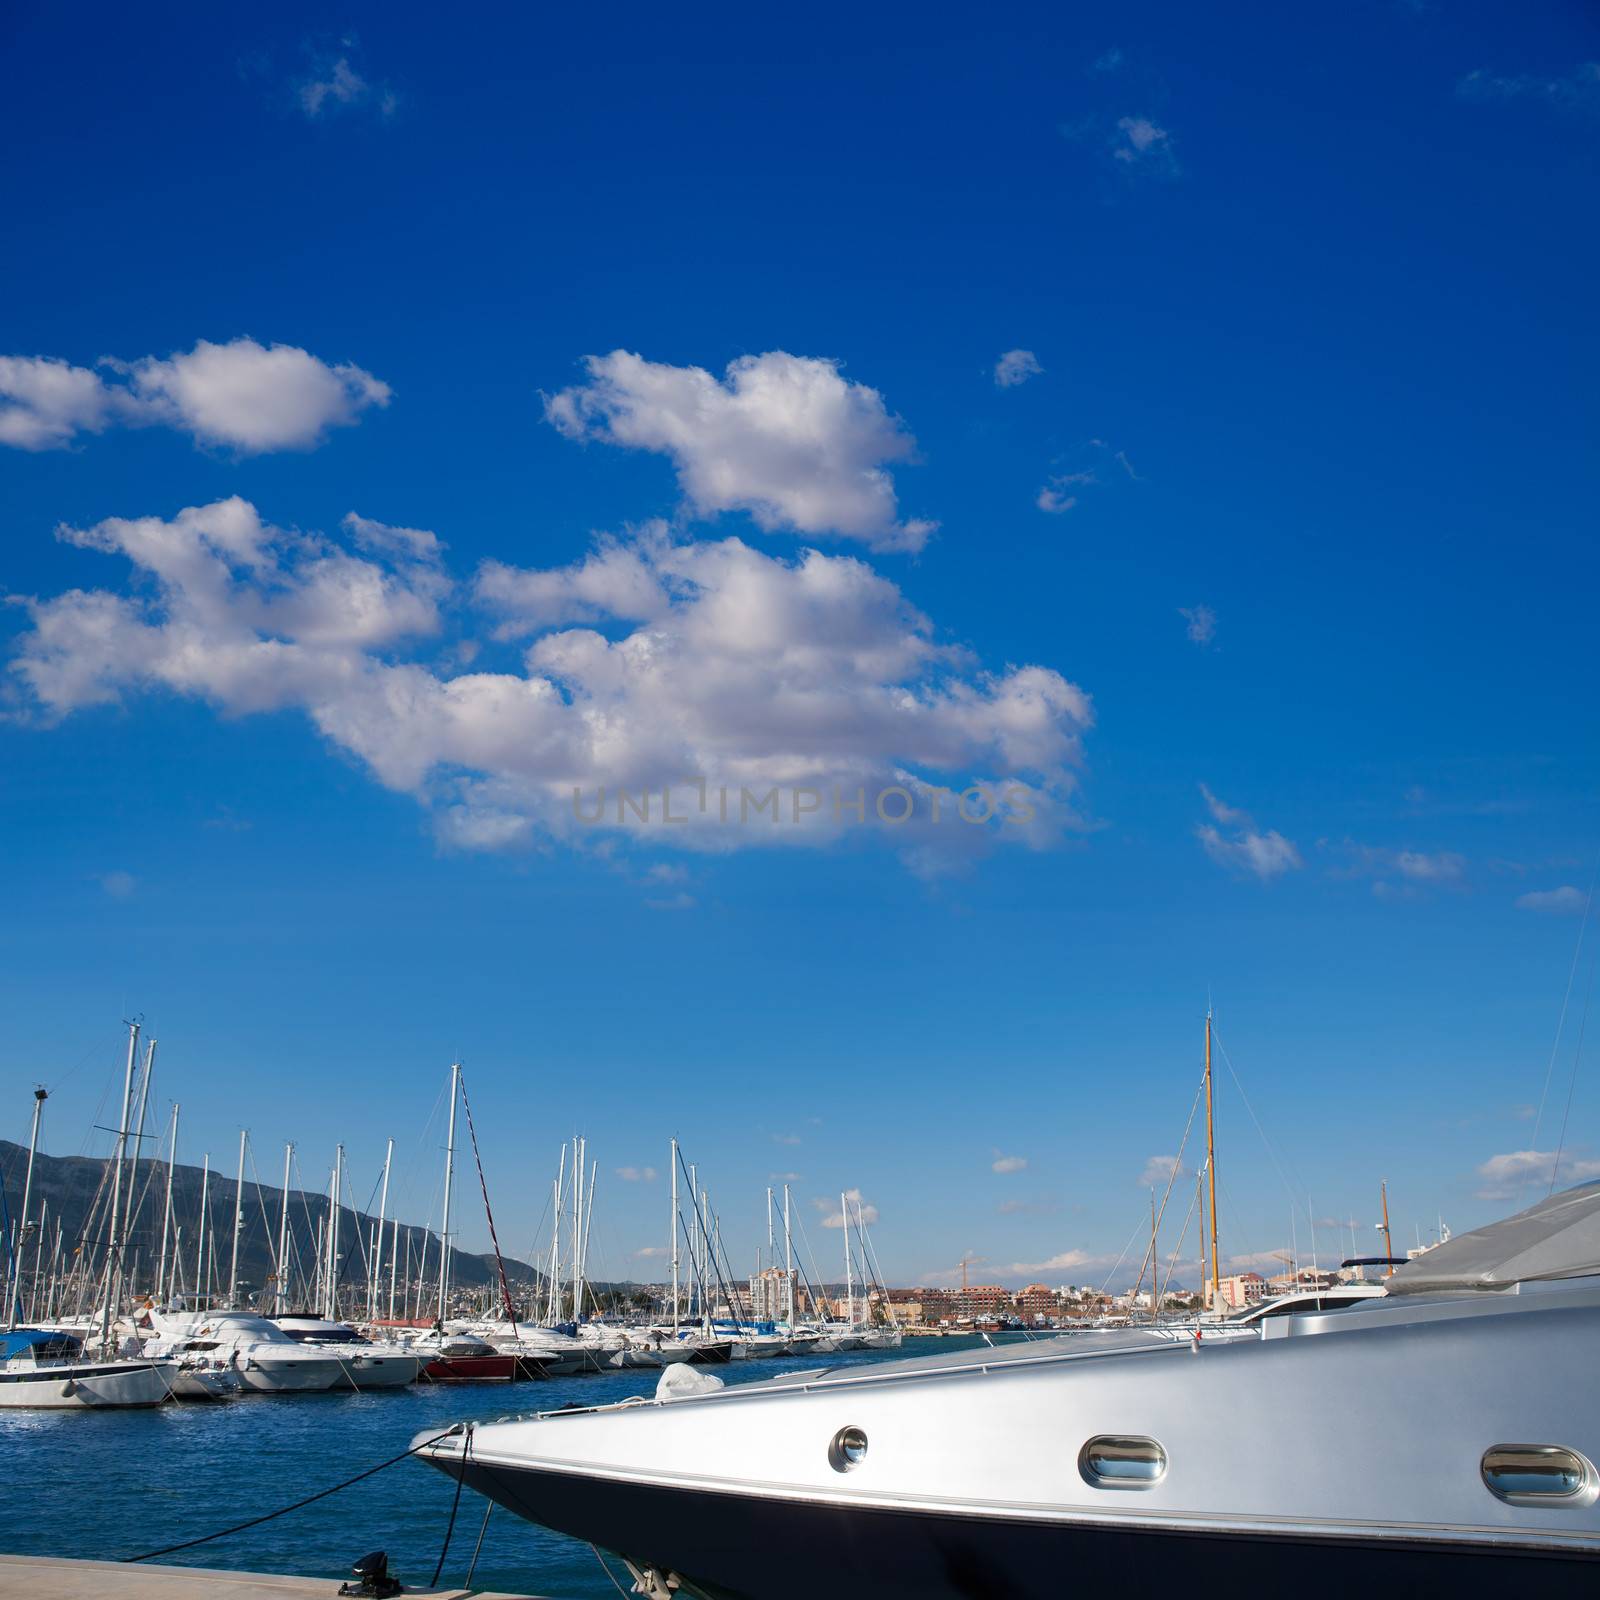 Denia Alicante marina boats in blue Mediterranean by lunamarina